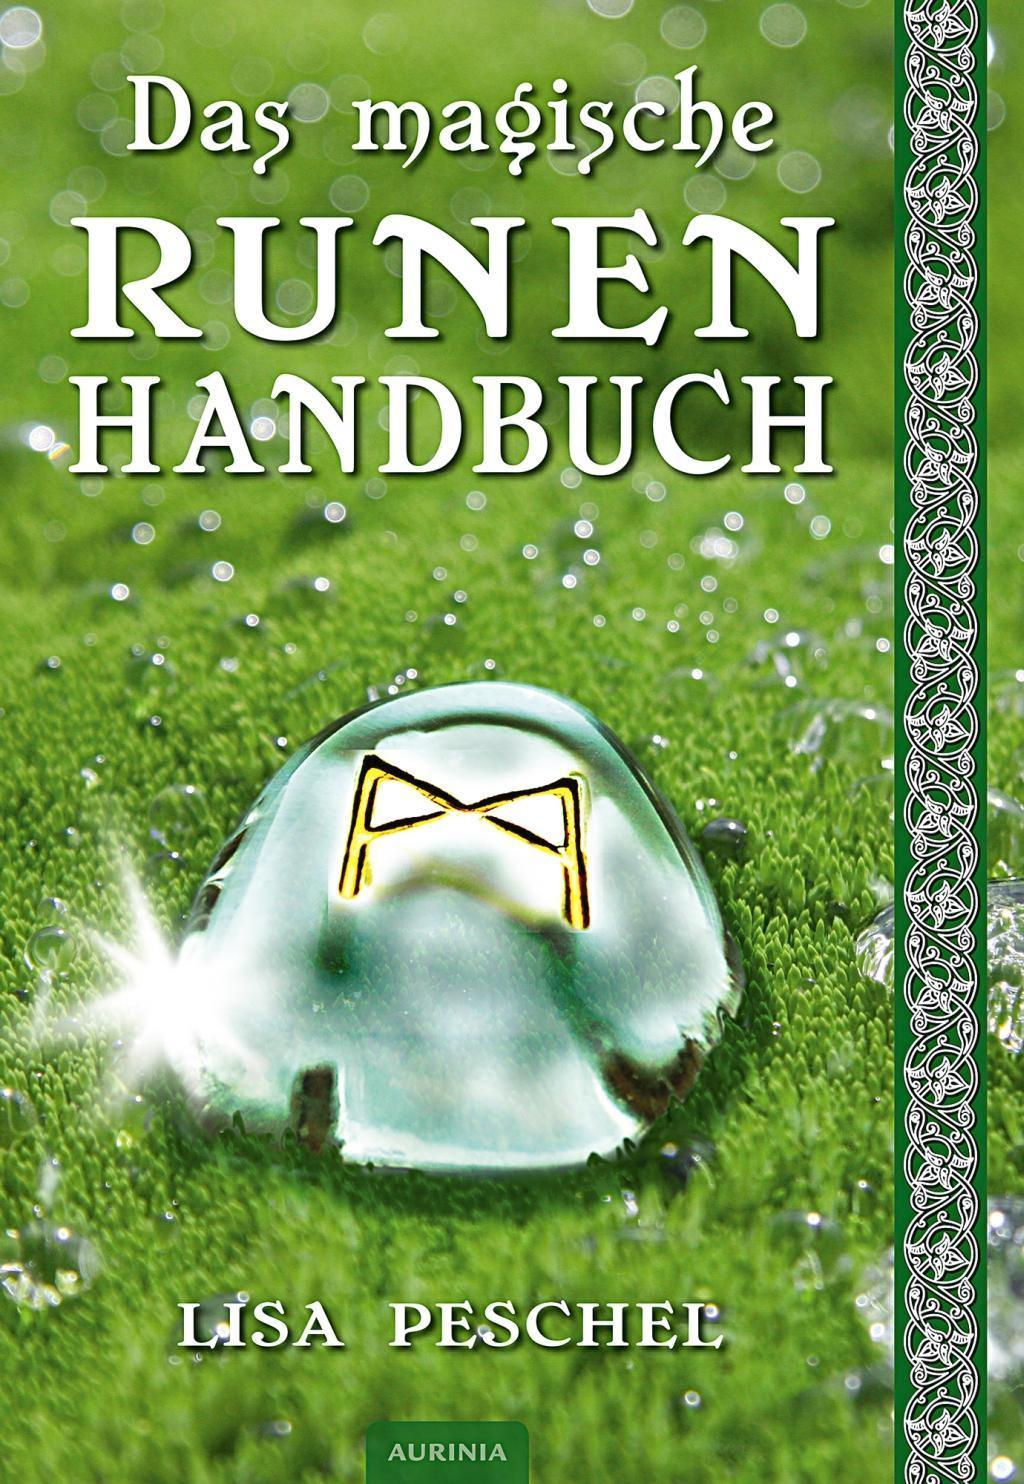 Das magische Runen Handbuch